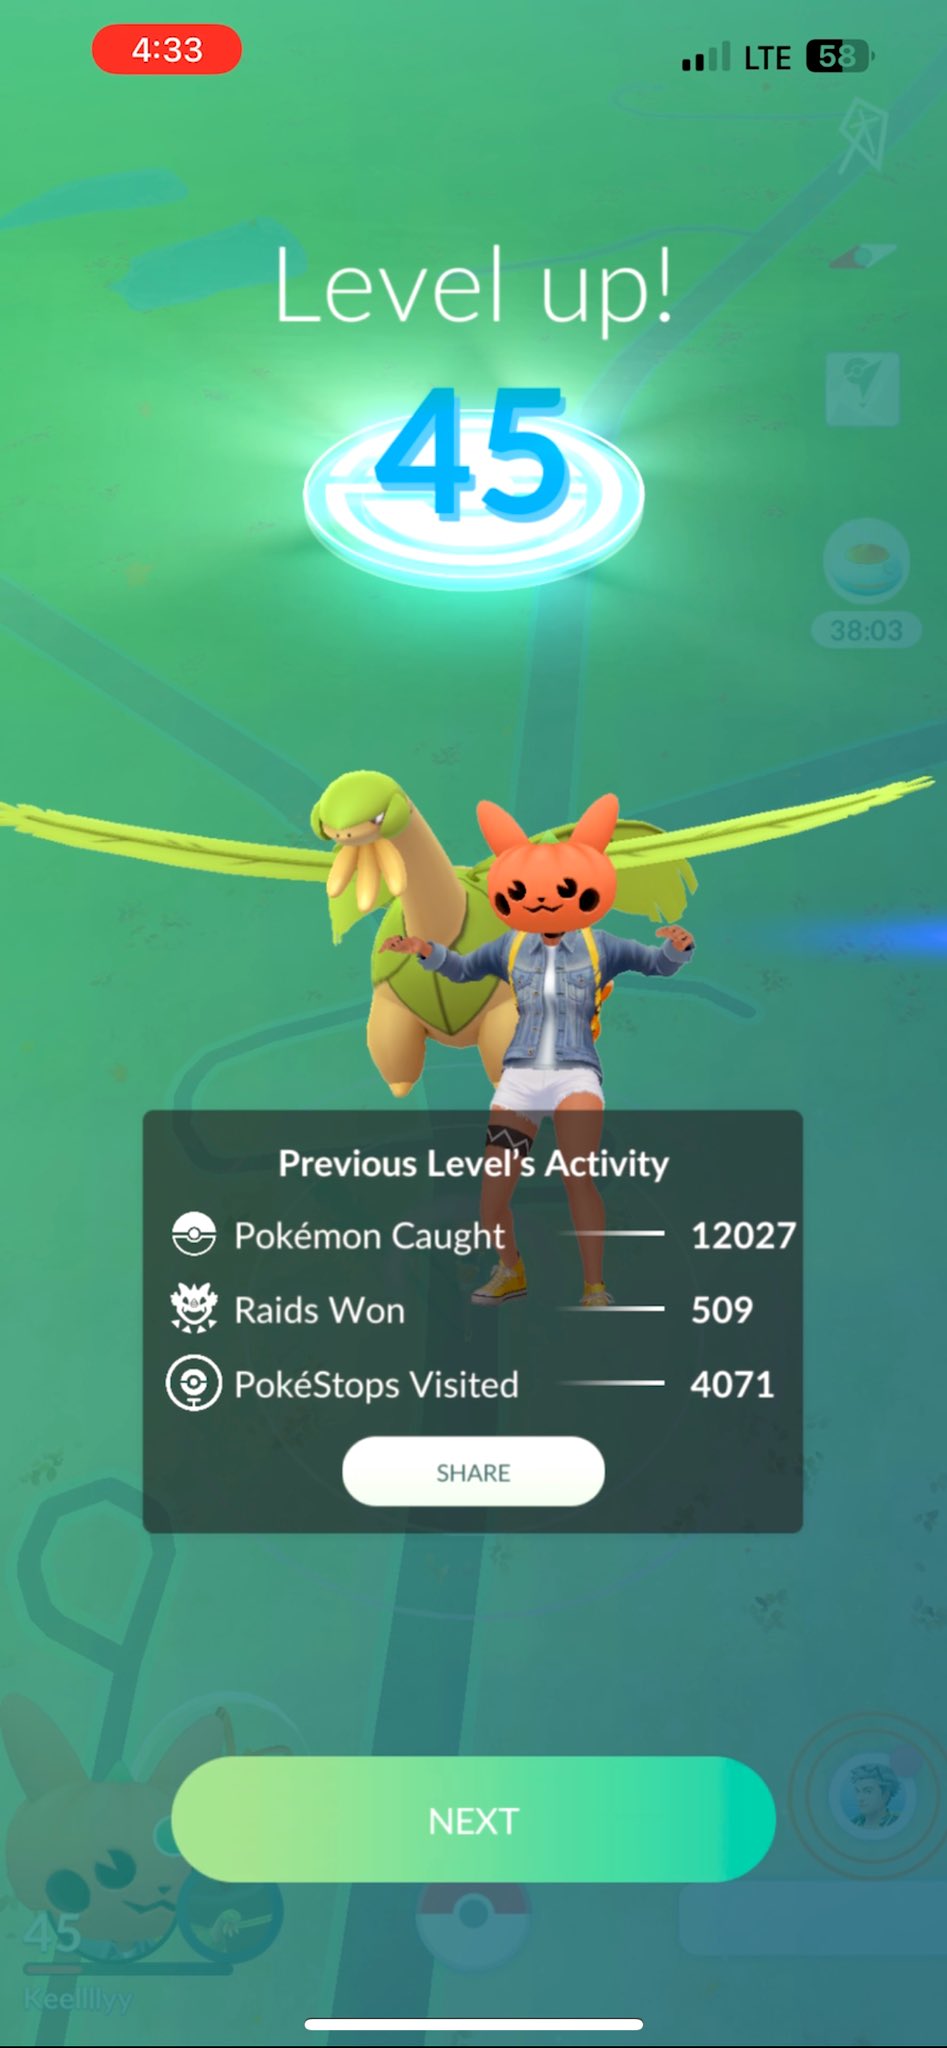 PoGOCentral on X: ✨ Missing Pokémon in Pokémon GO ✨ Here are